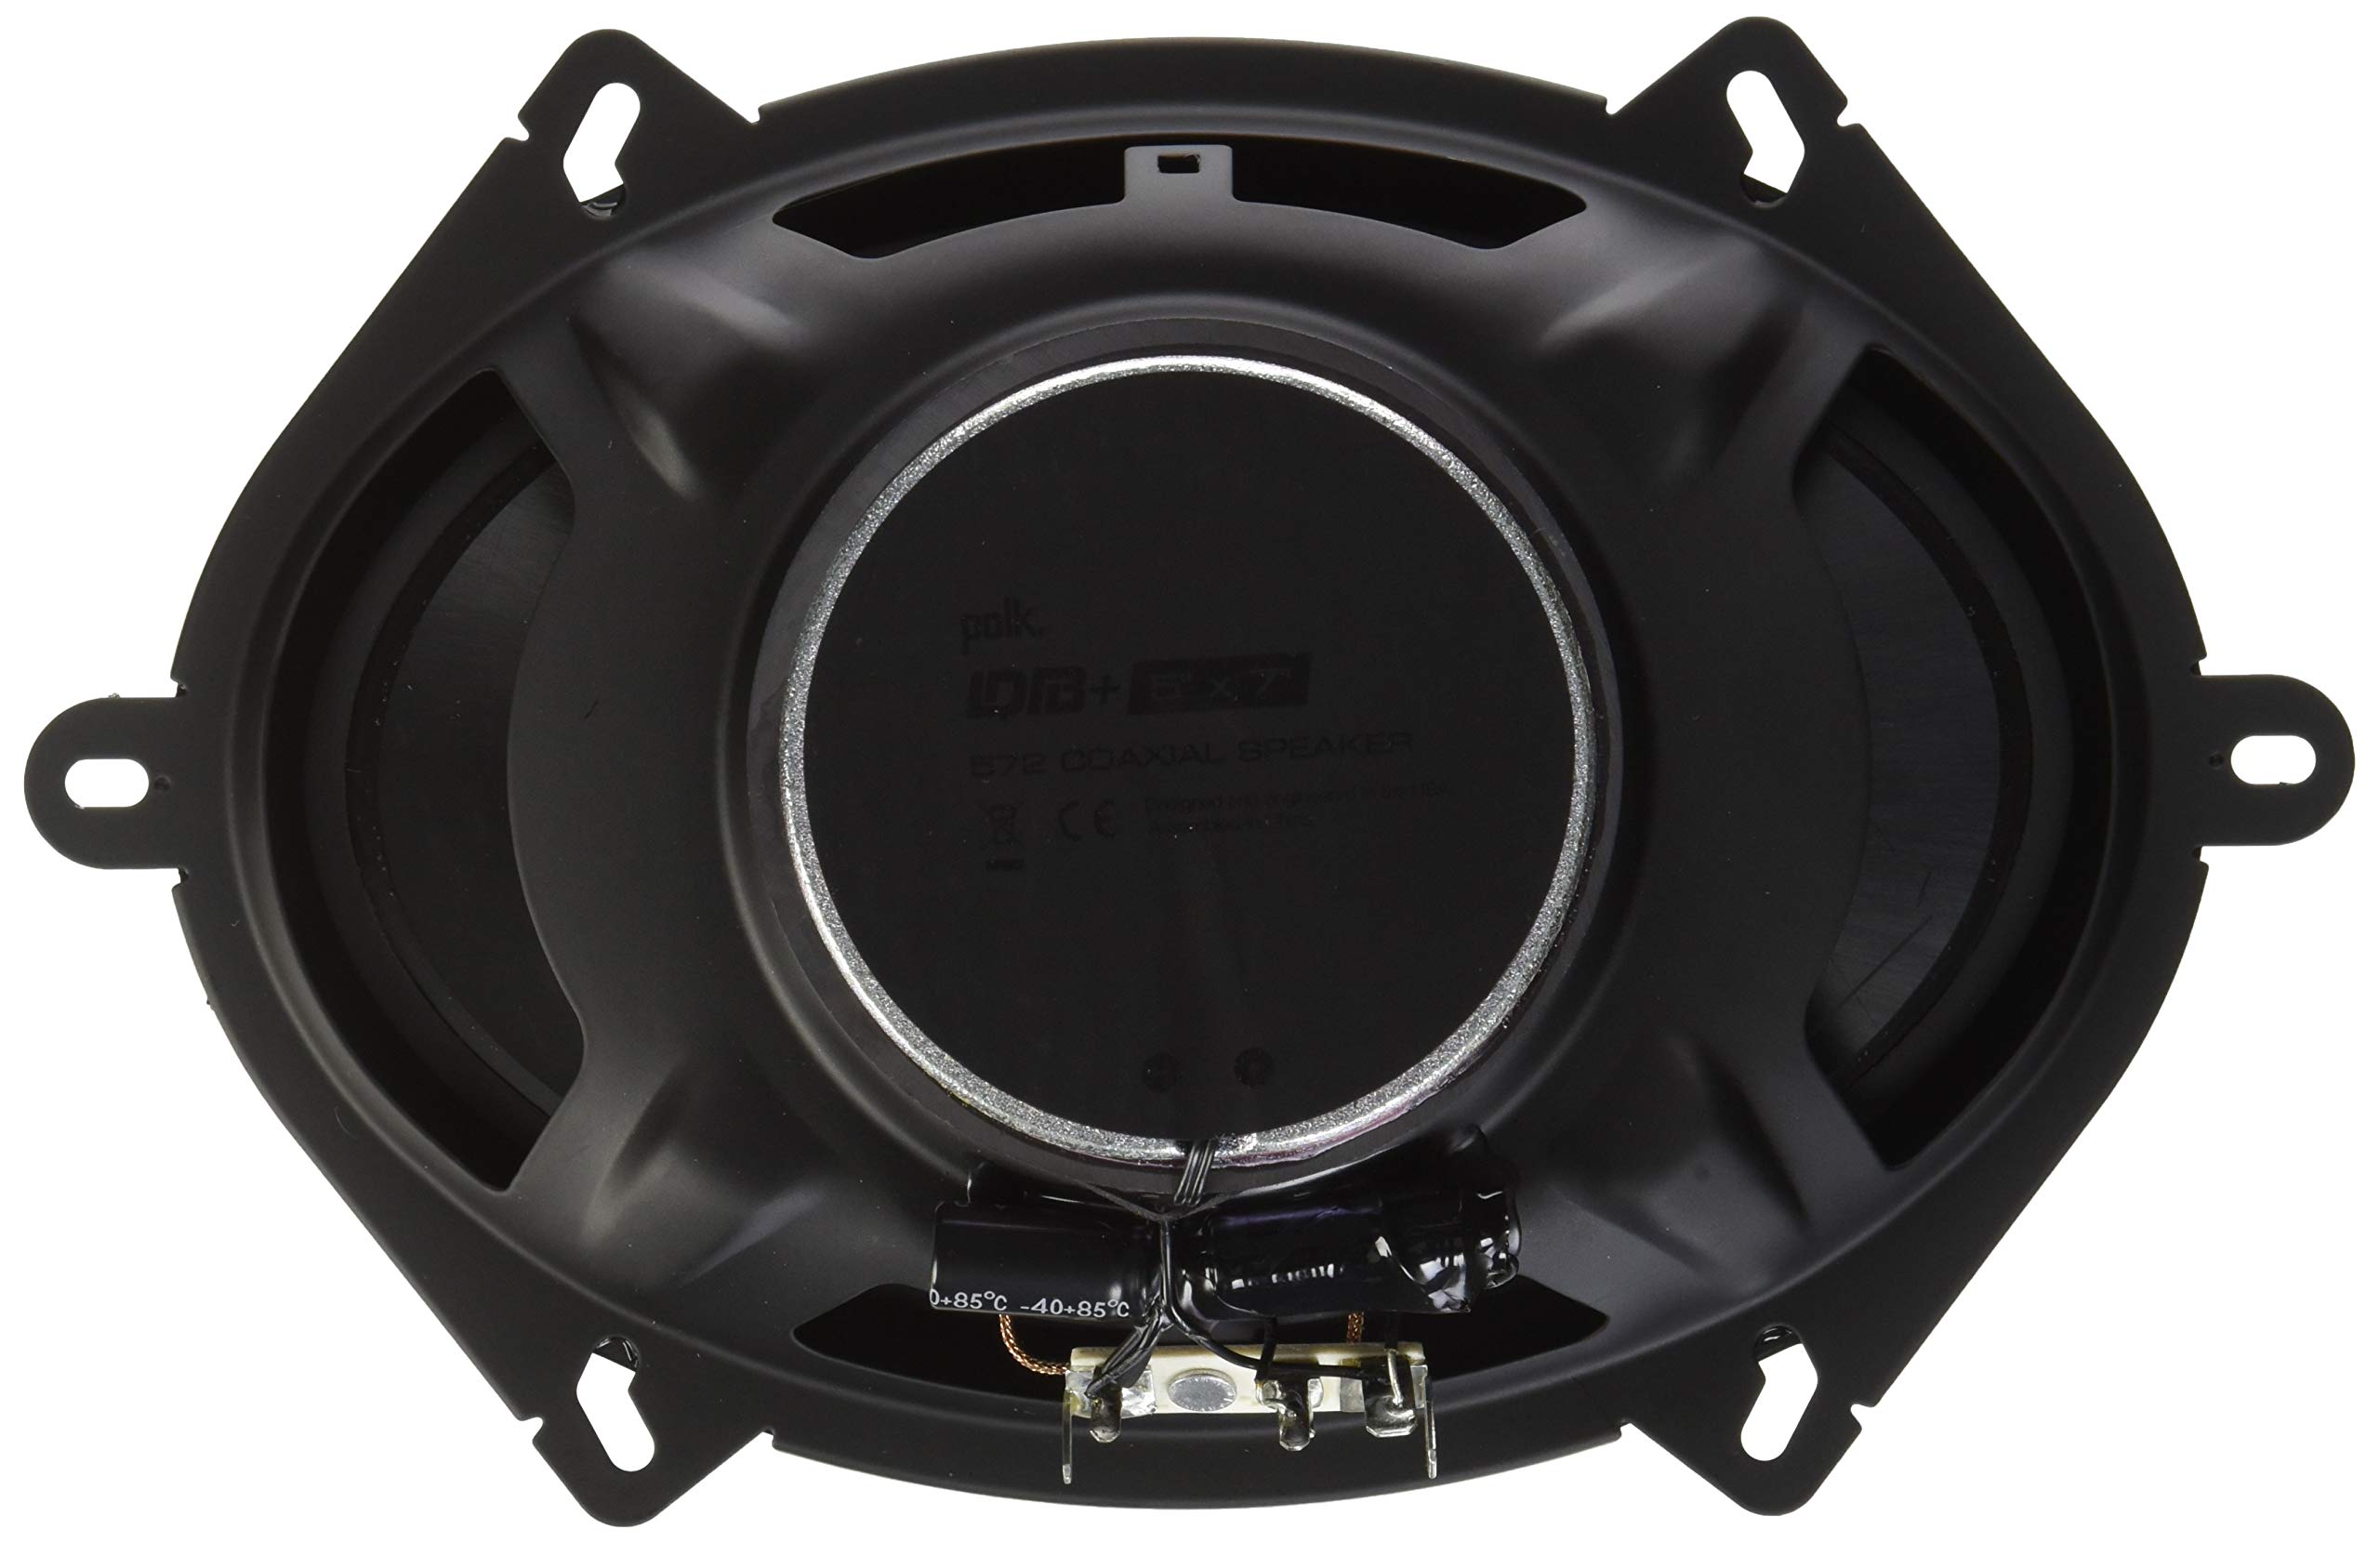 POLDB572 Polk Audio DB572 DB+ Series 5"x7" Coaxial Speakers with Marine Certification, Black - image 3 of 3